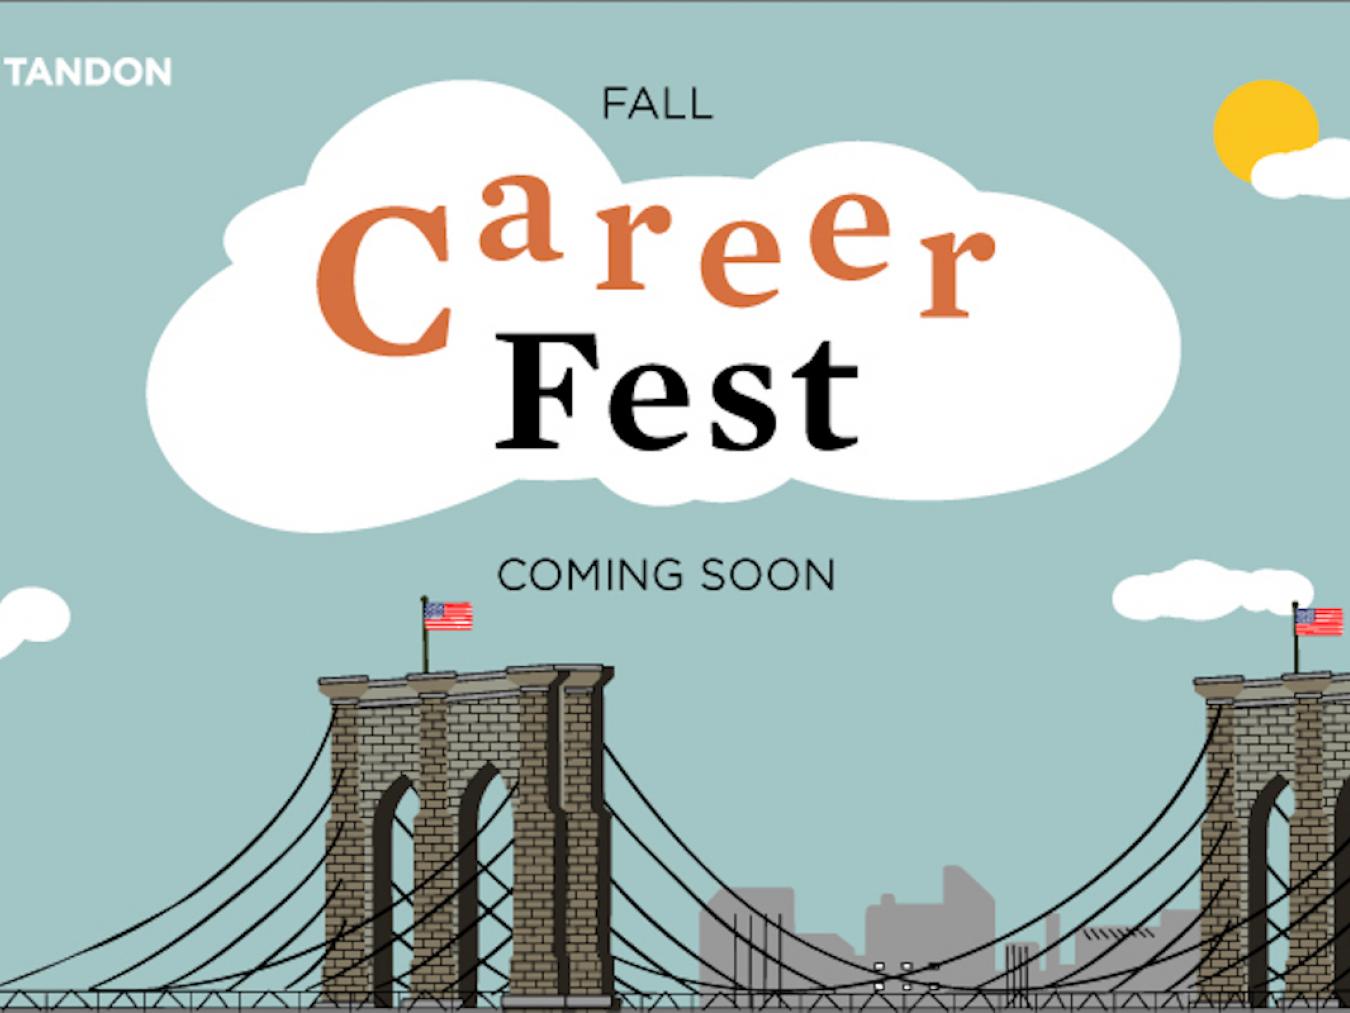 Fall 2020 Career Fest | NYU Tandon School of Engineering